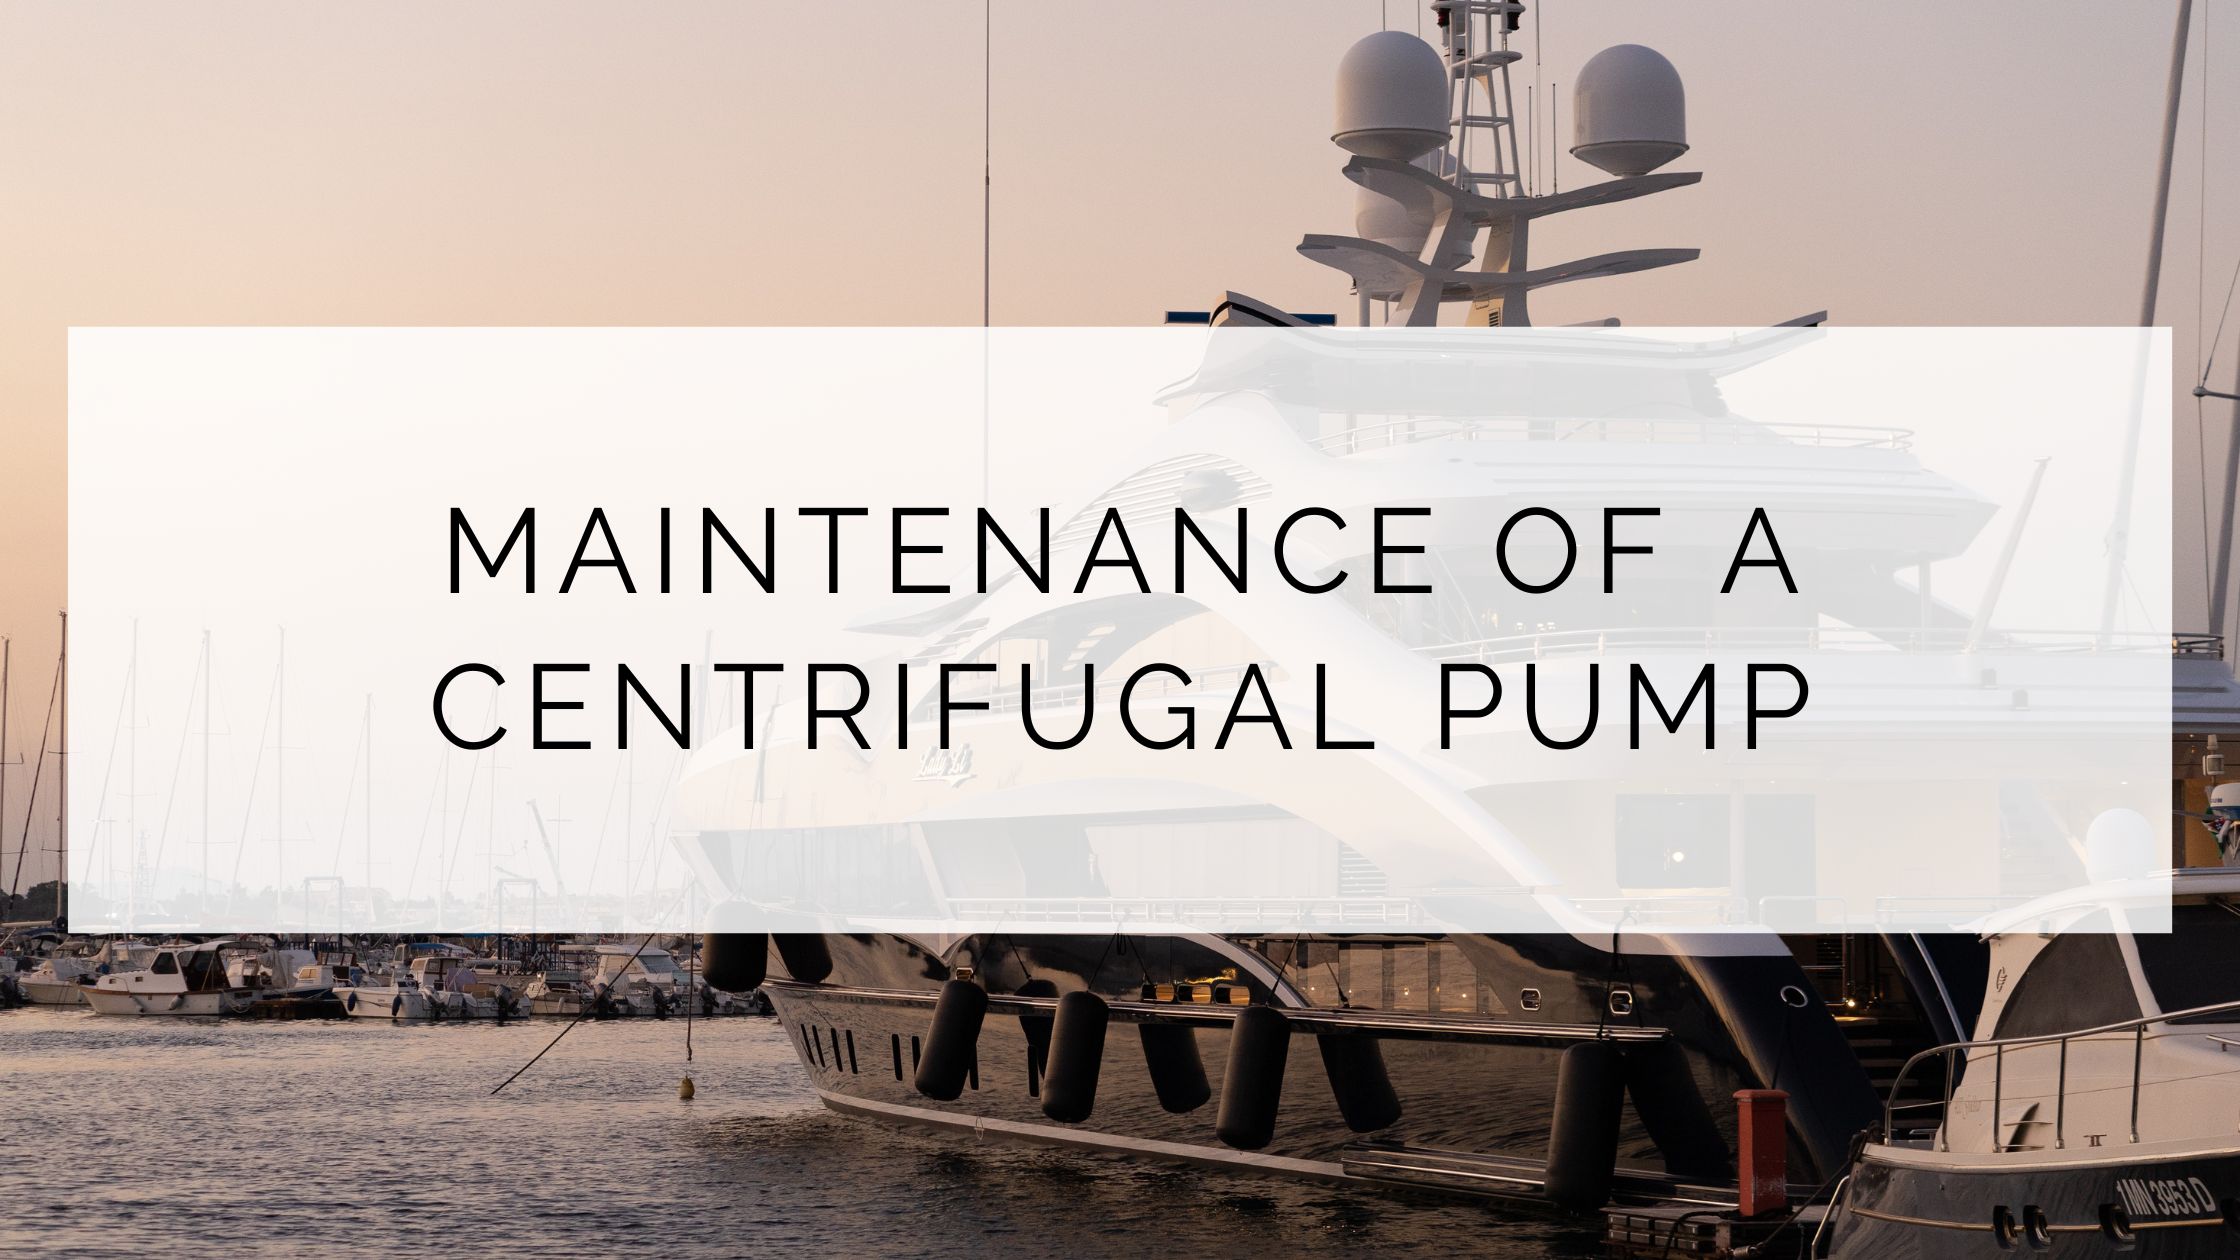 Maintenance of a centrifugal pump